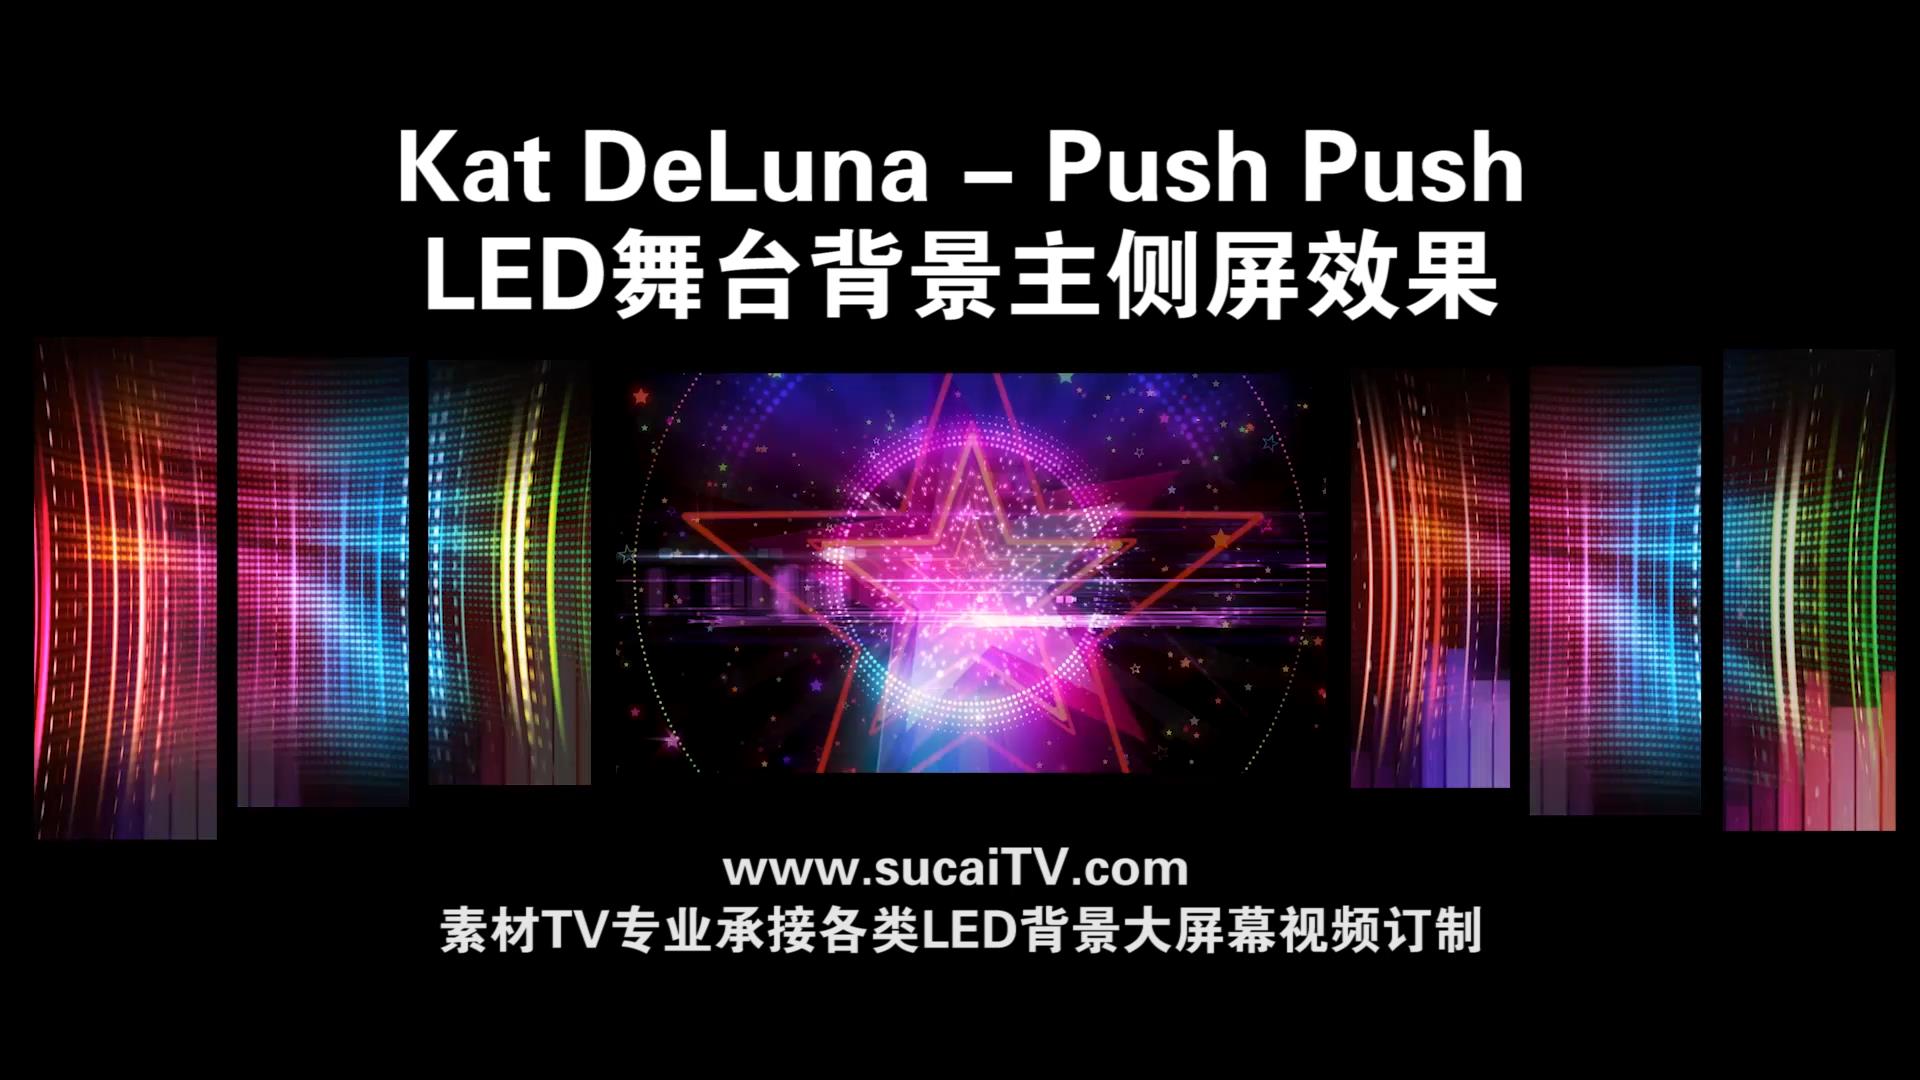 Kat DeLuna - Push Push-主侧屏成片舞台演出LED背景大屏